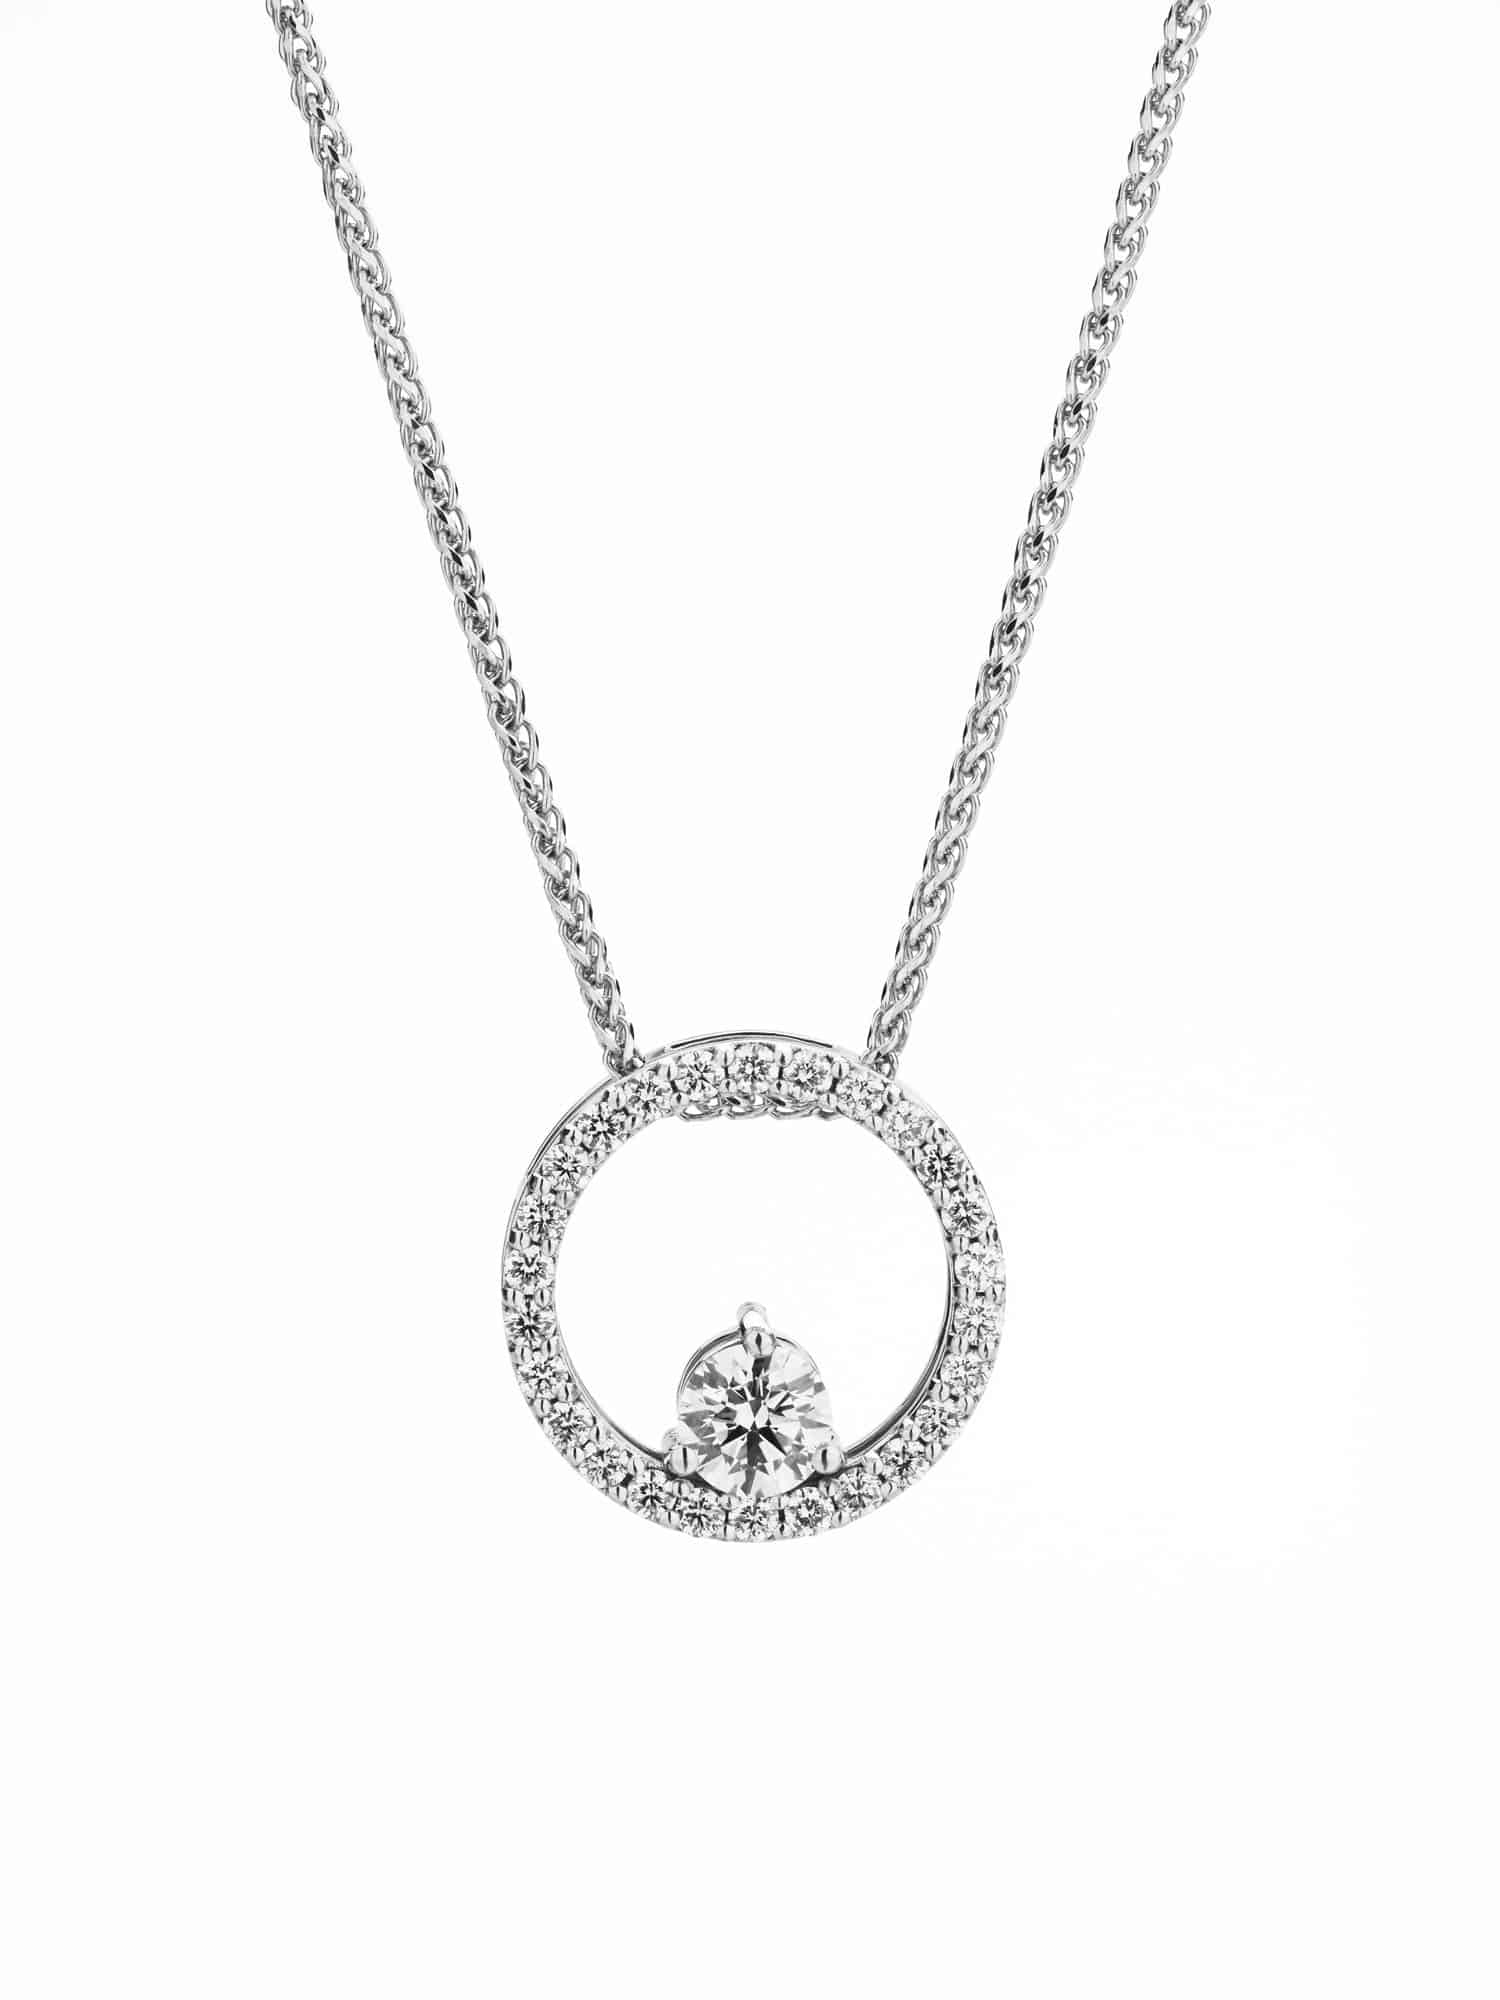 Diamond circle pendant and necklace